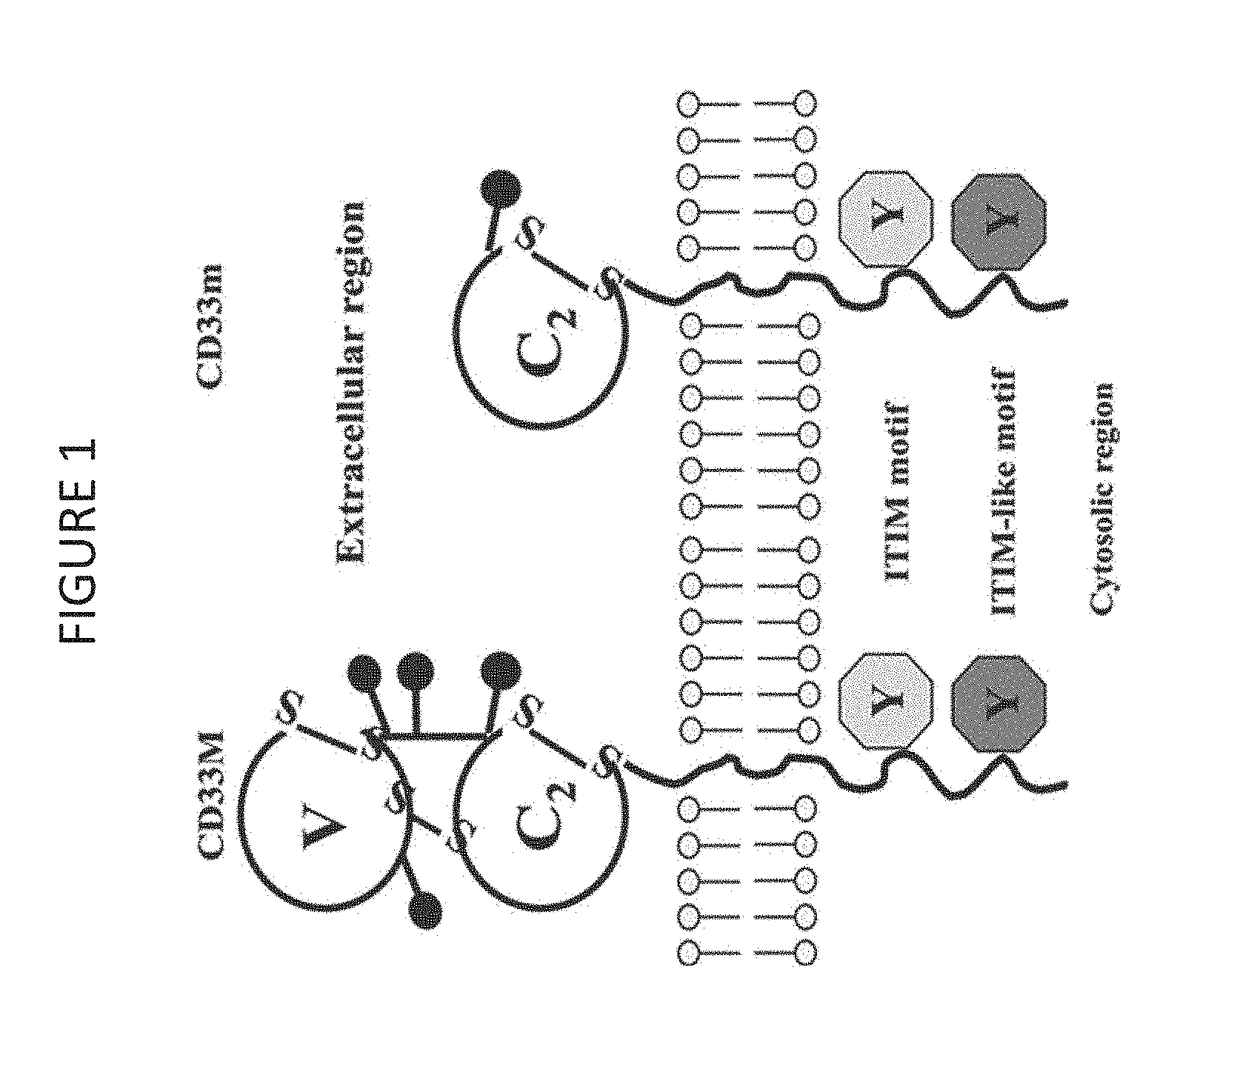 Cd33 specific chimeric antigen receptors